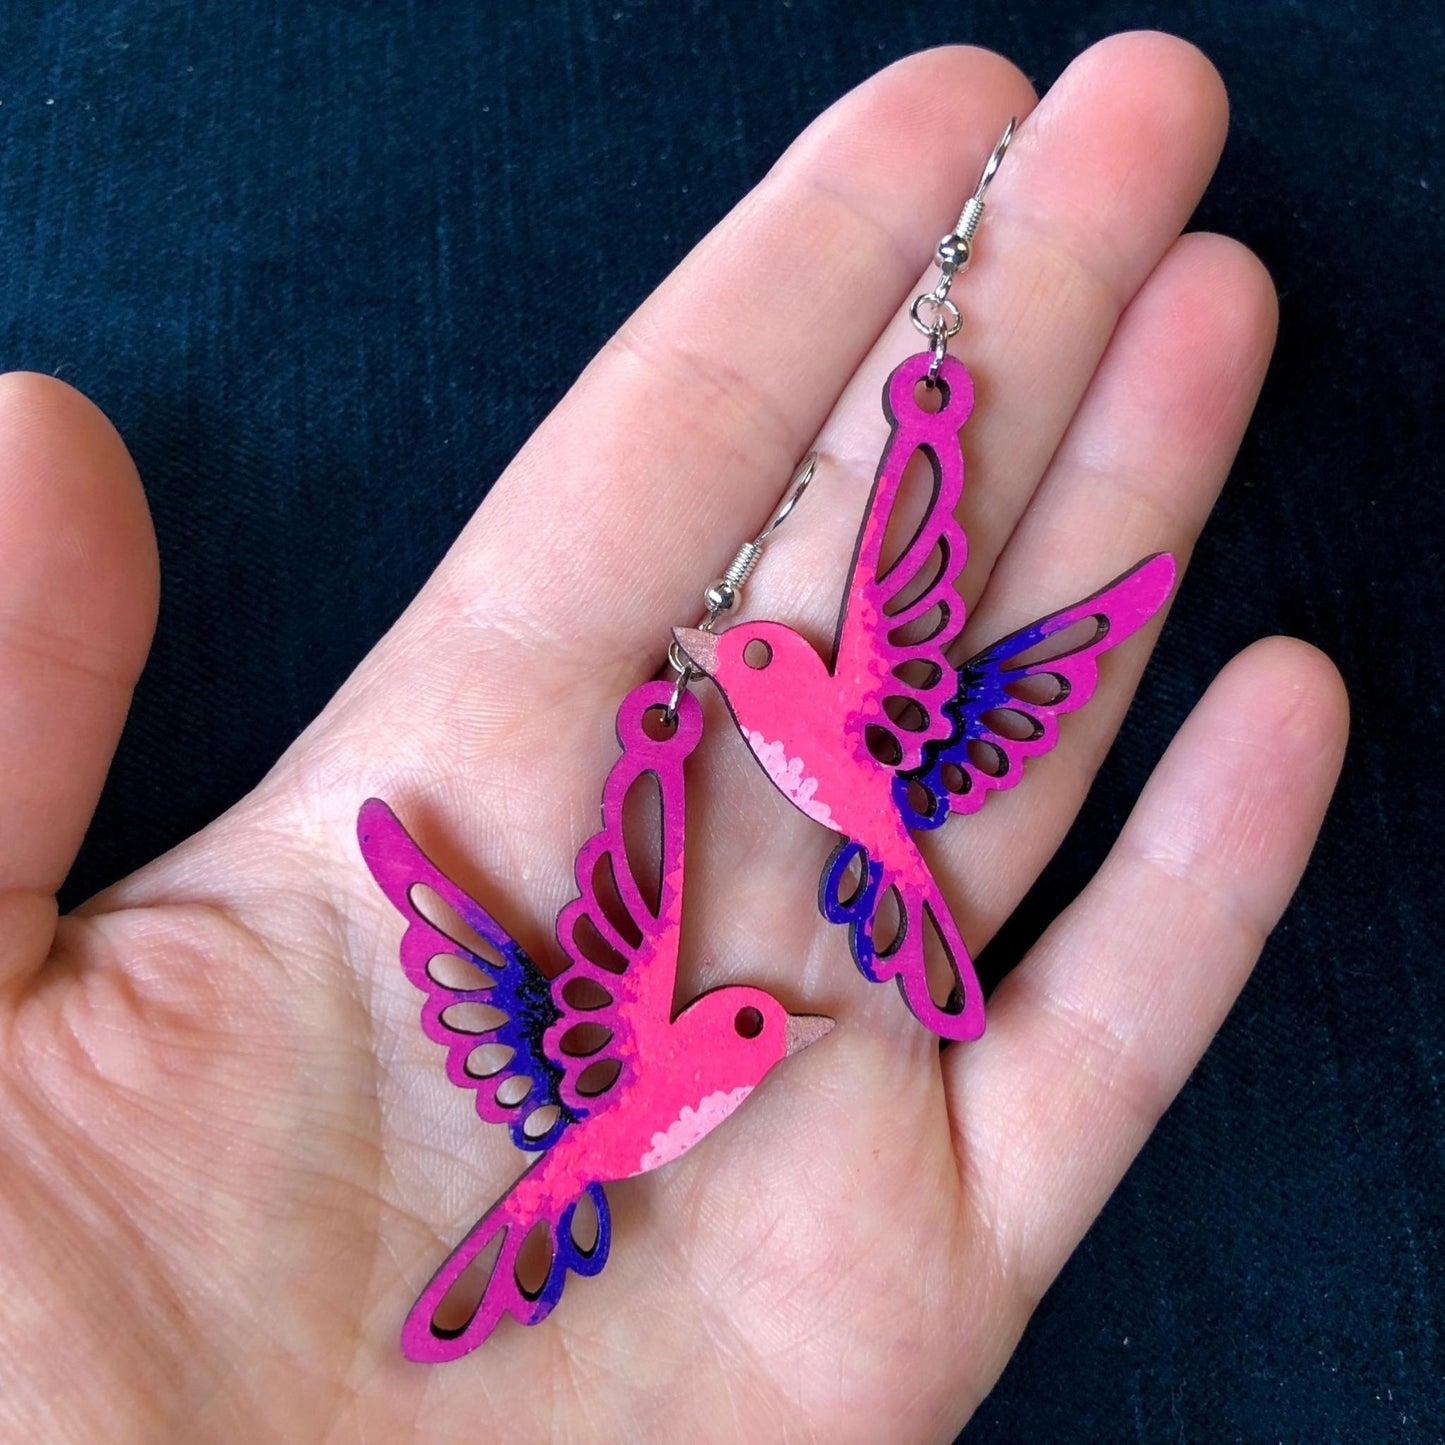 Barbie Bird - Hand-Painted Wood Earrings - Driftless Enchantments